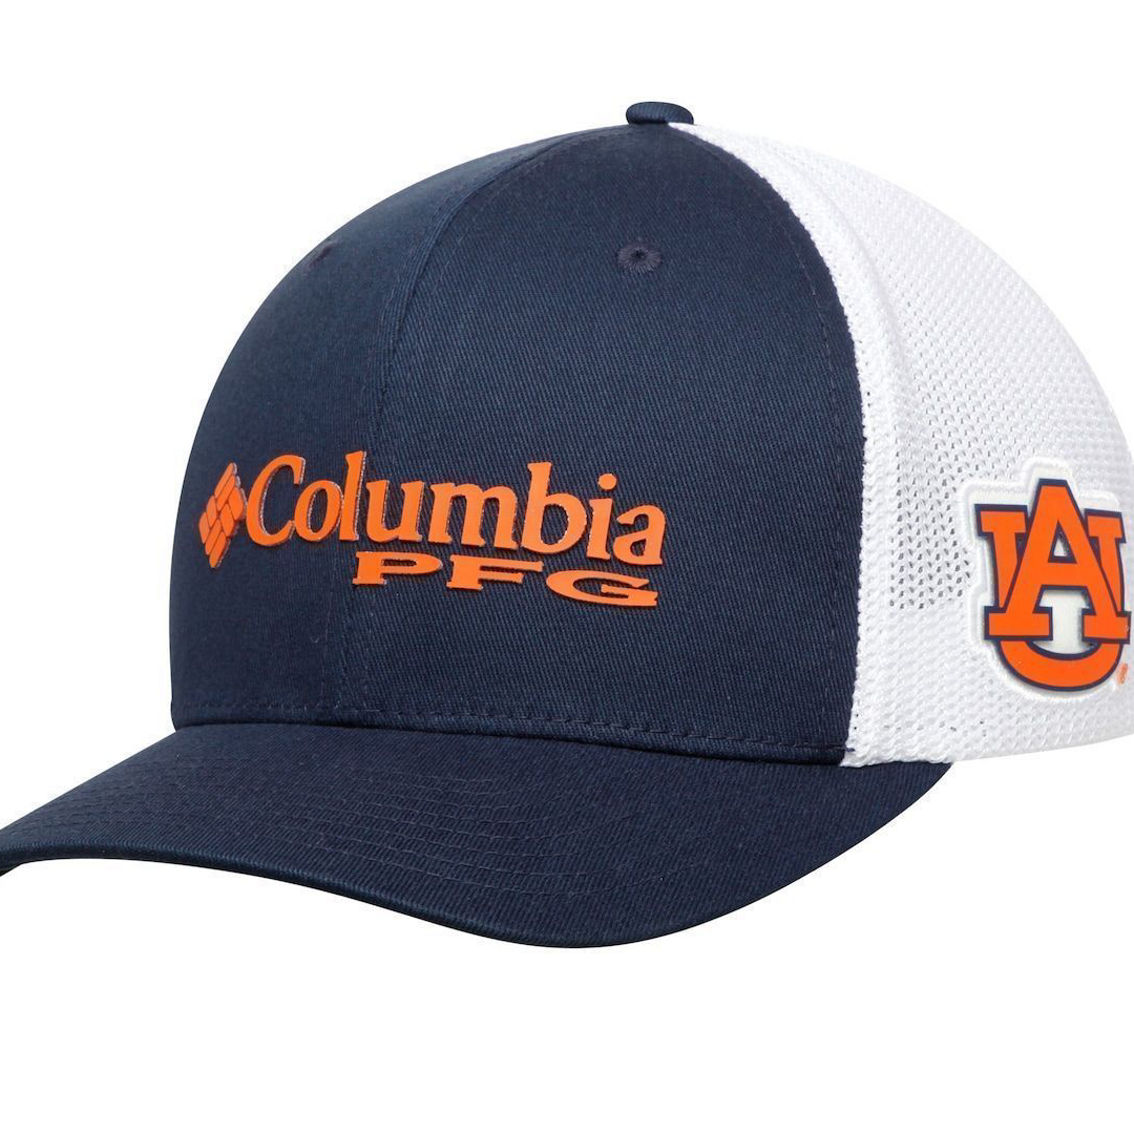 Men's Columbia Navy Auburn Tigers Collegiate PFG Flex Hat